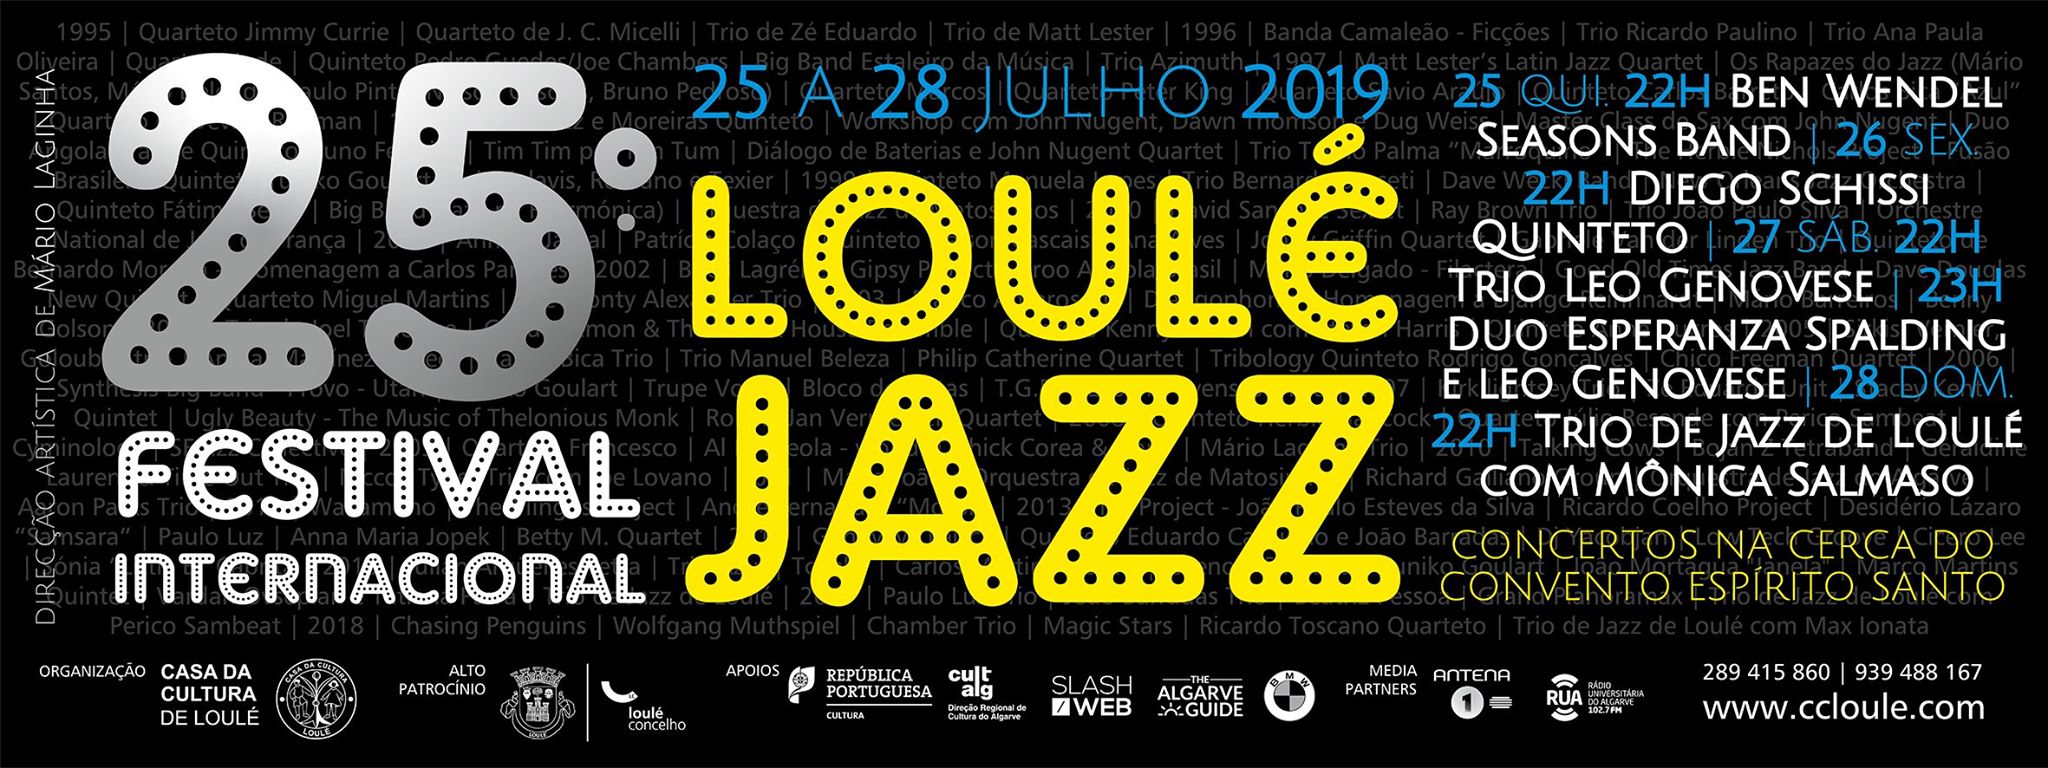 banner Festival internacional de Jazz de loulé 2019